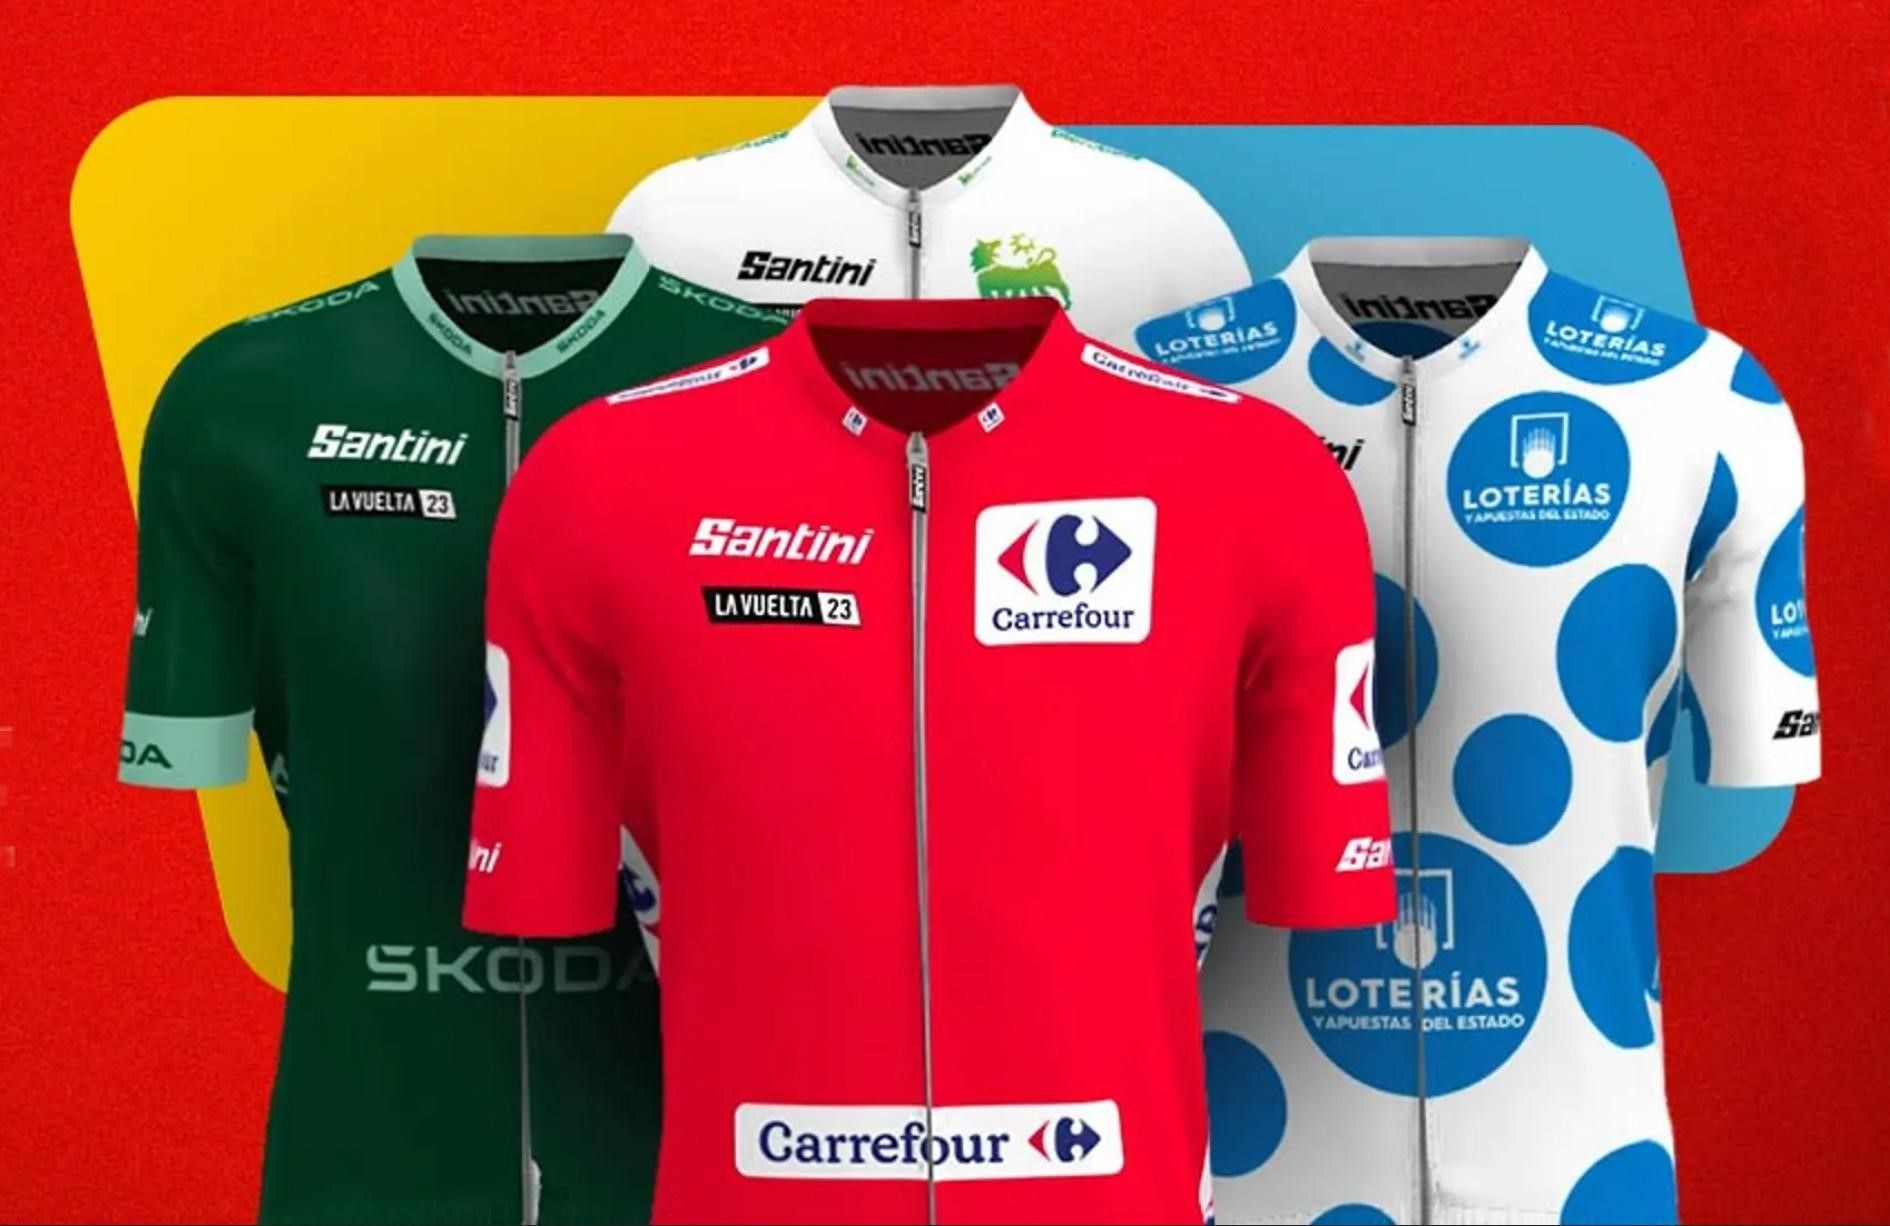 The GC jersey colours at La Vuelta